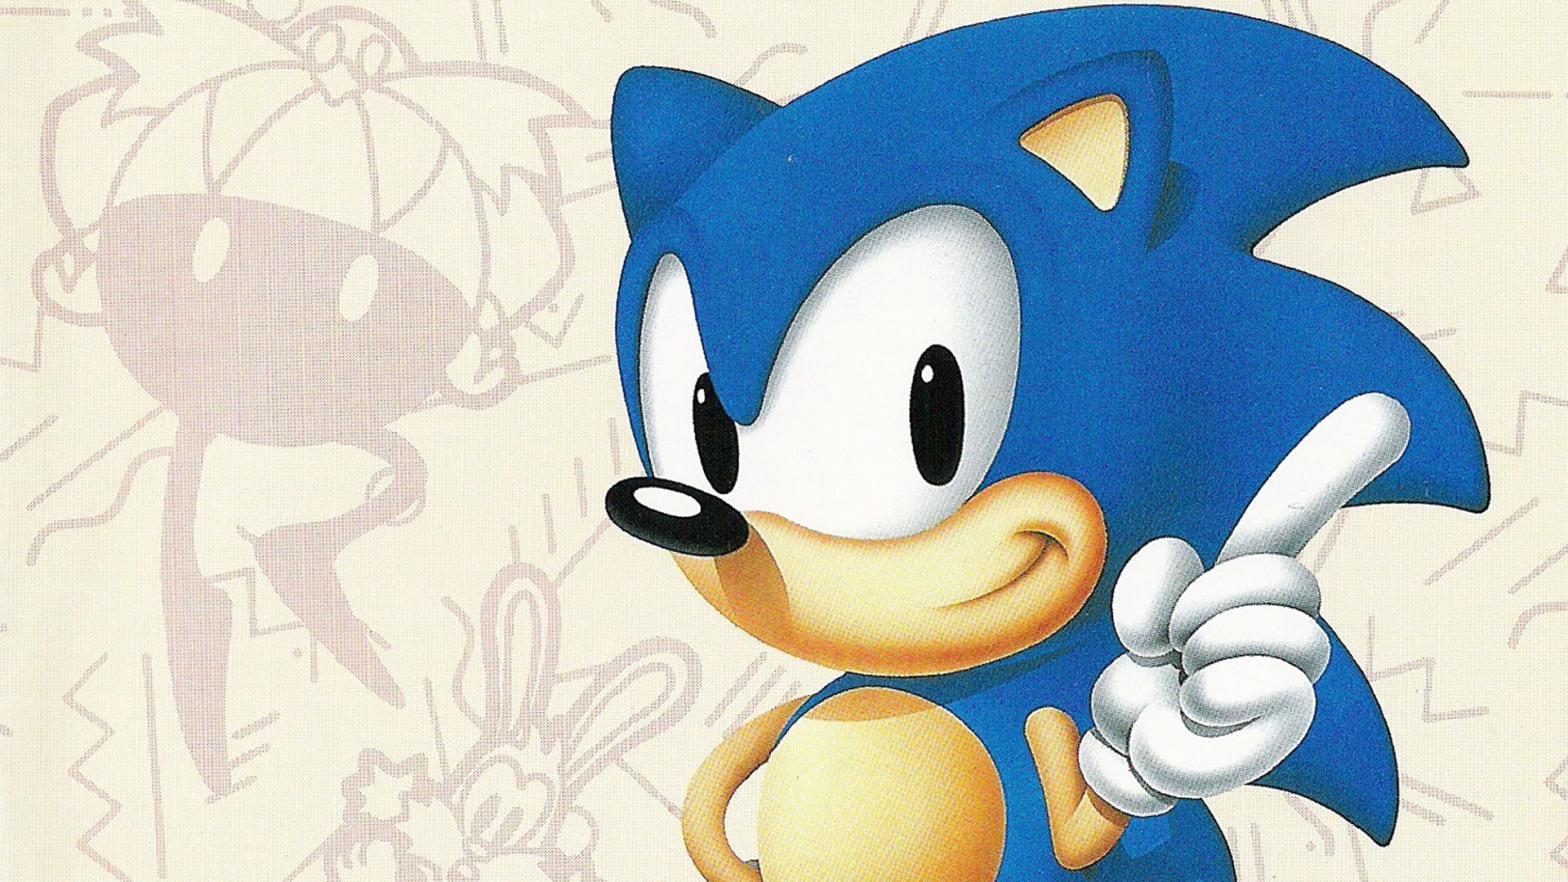 Image: Sonic the Hedgehog